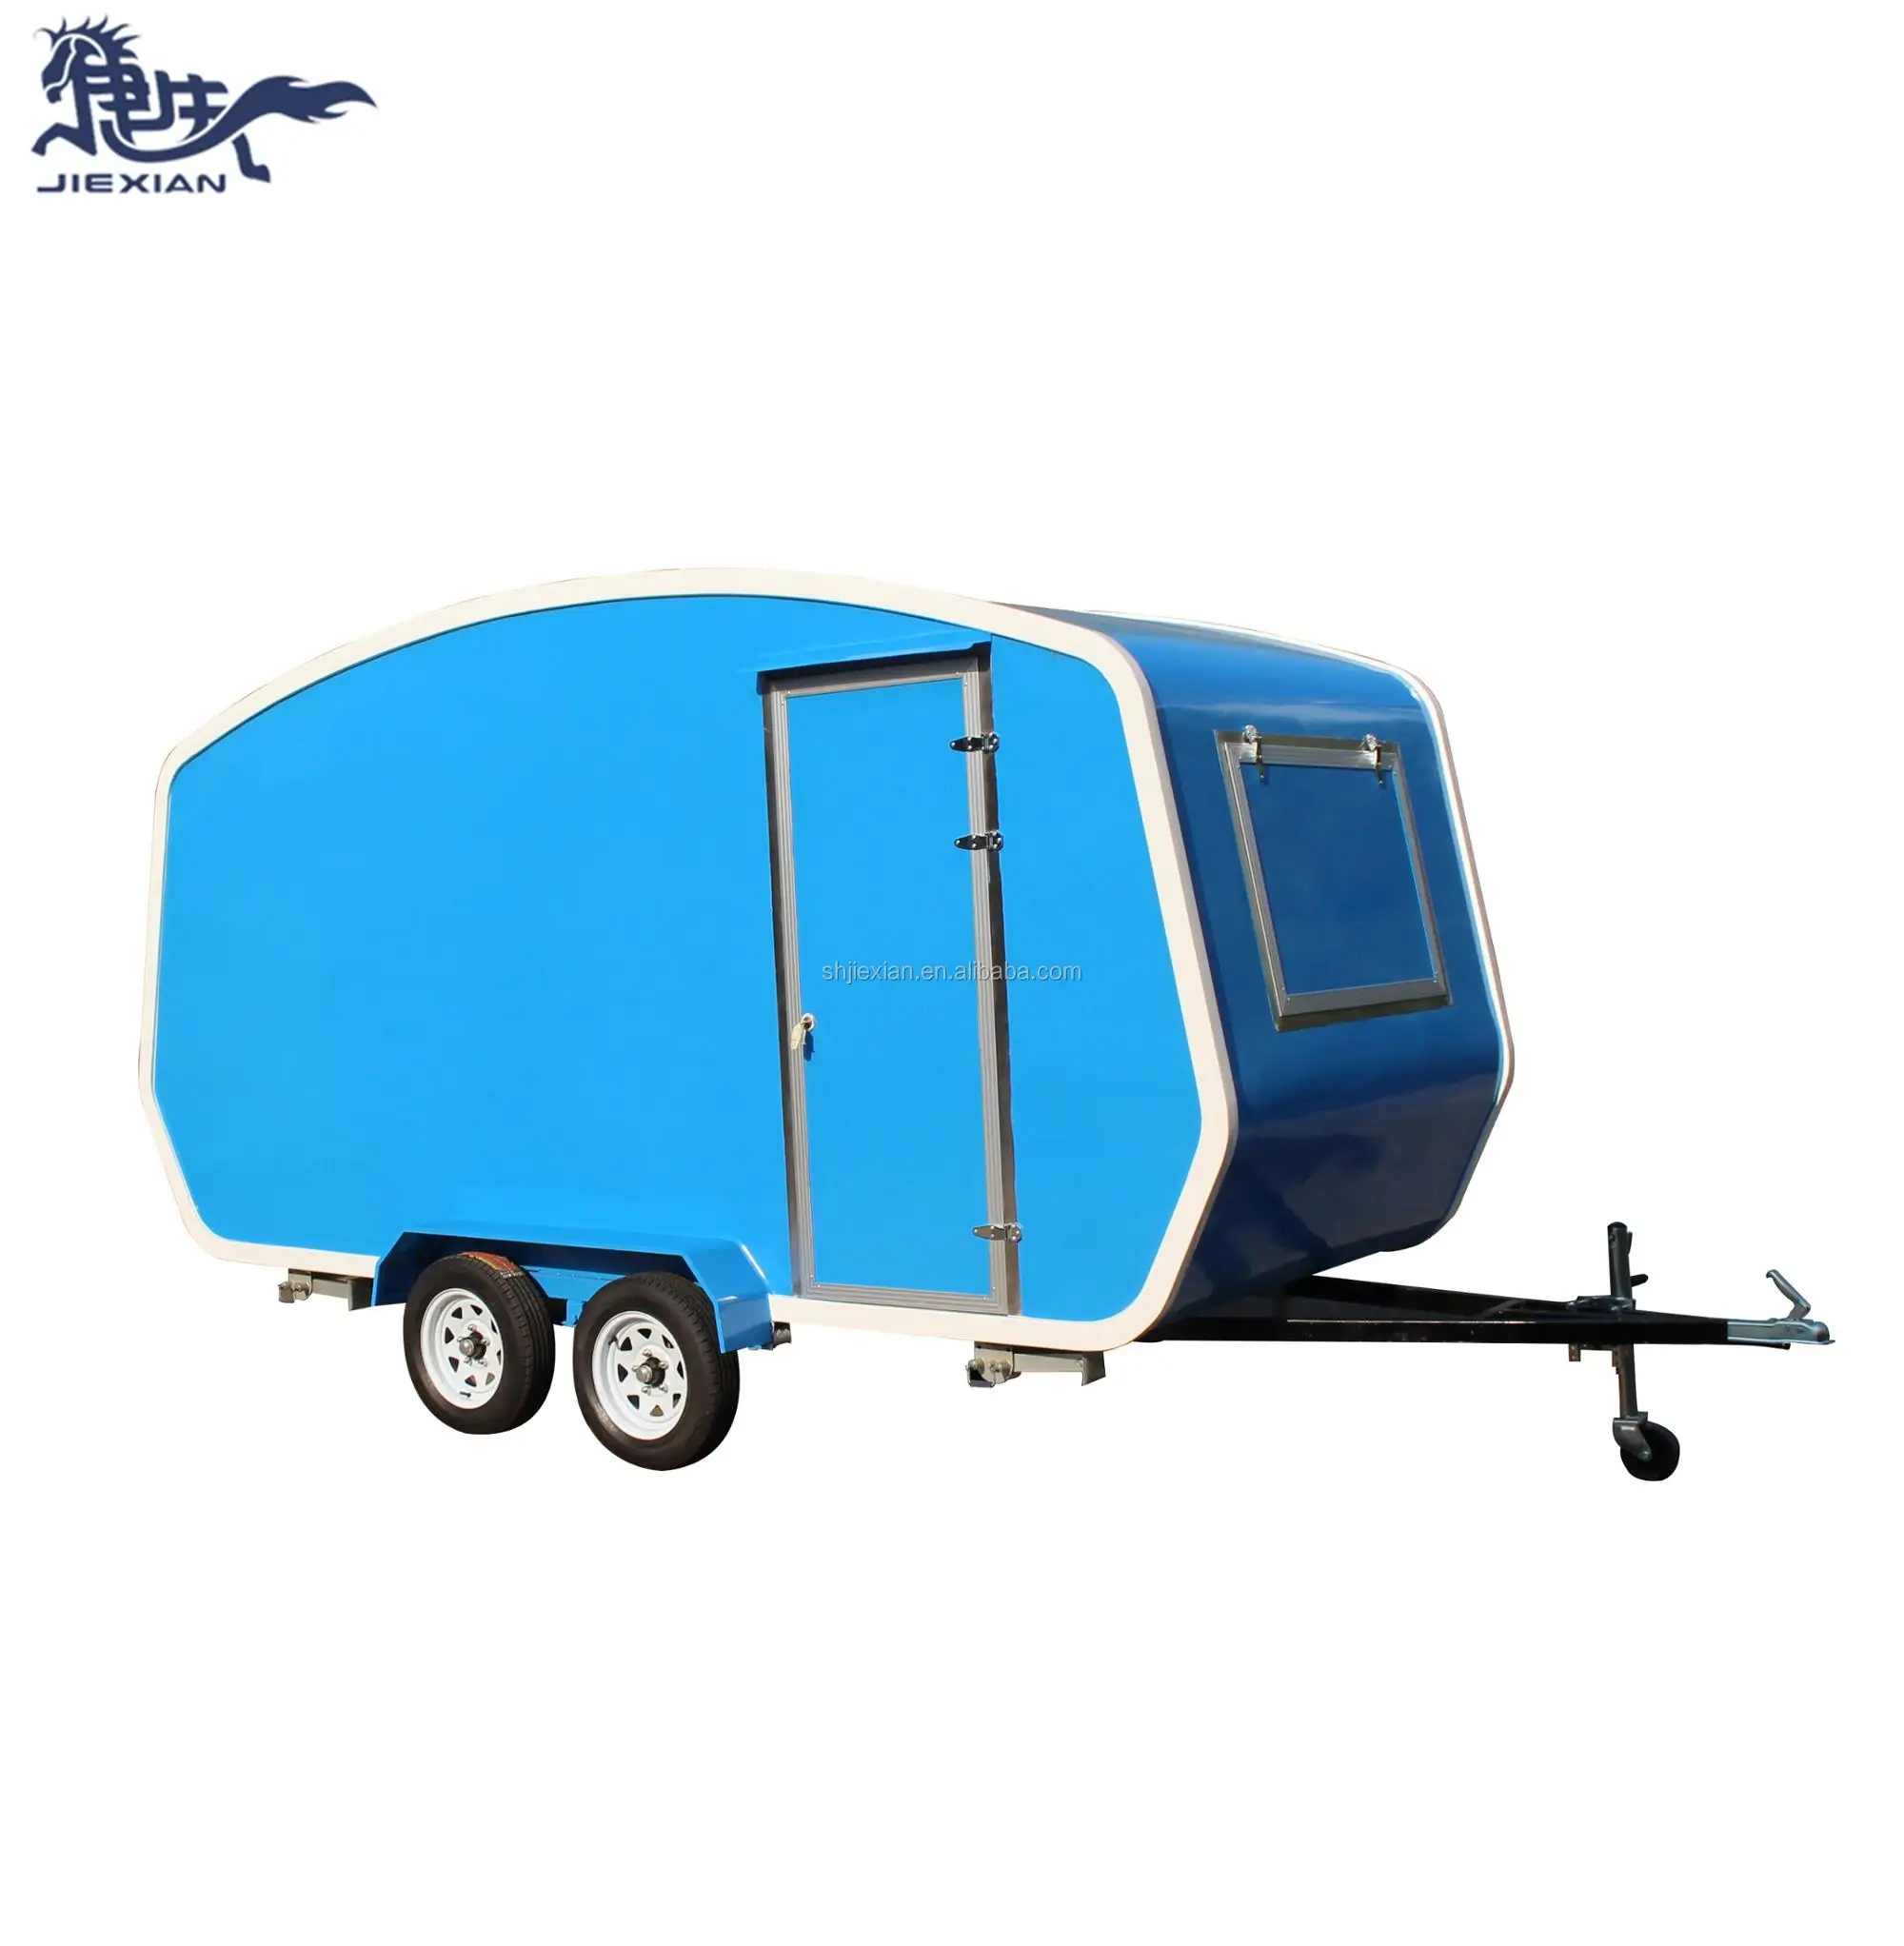 jx-fv435 定制小玻璃纤维澳大利亚豪华越野旅行拖车露营大caravan